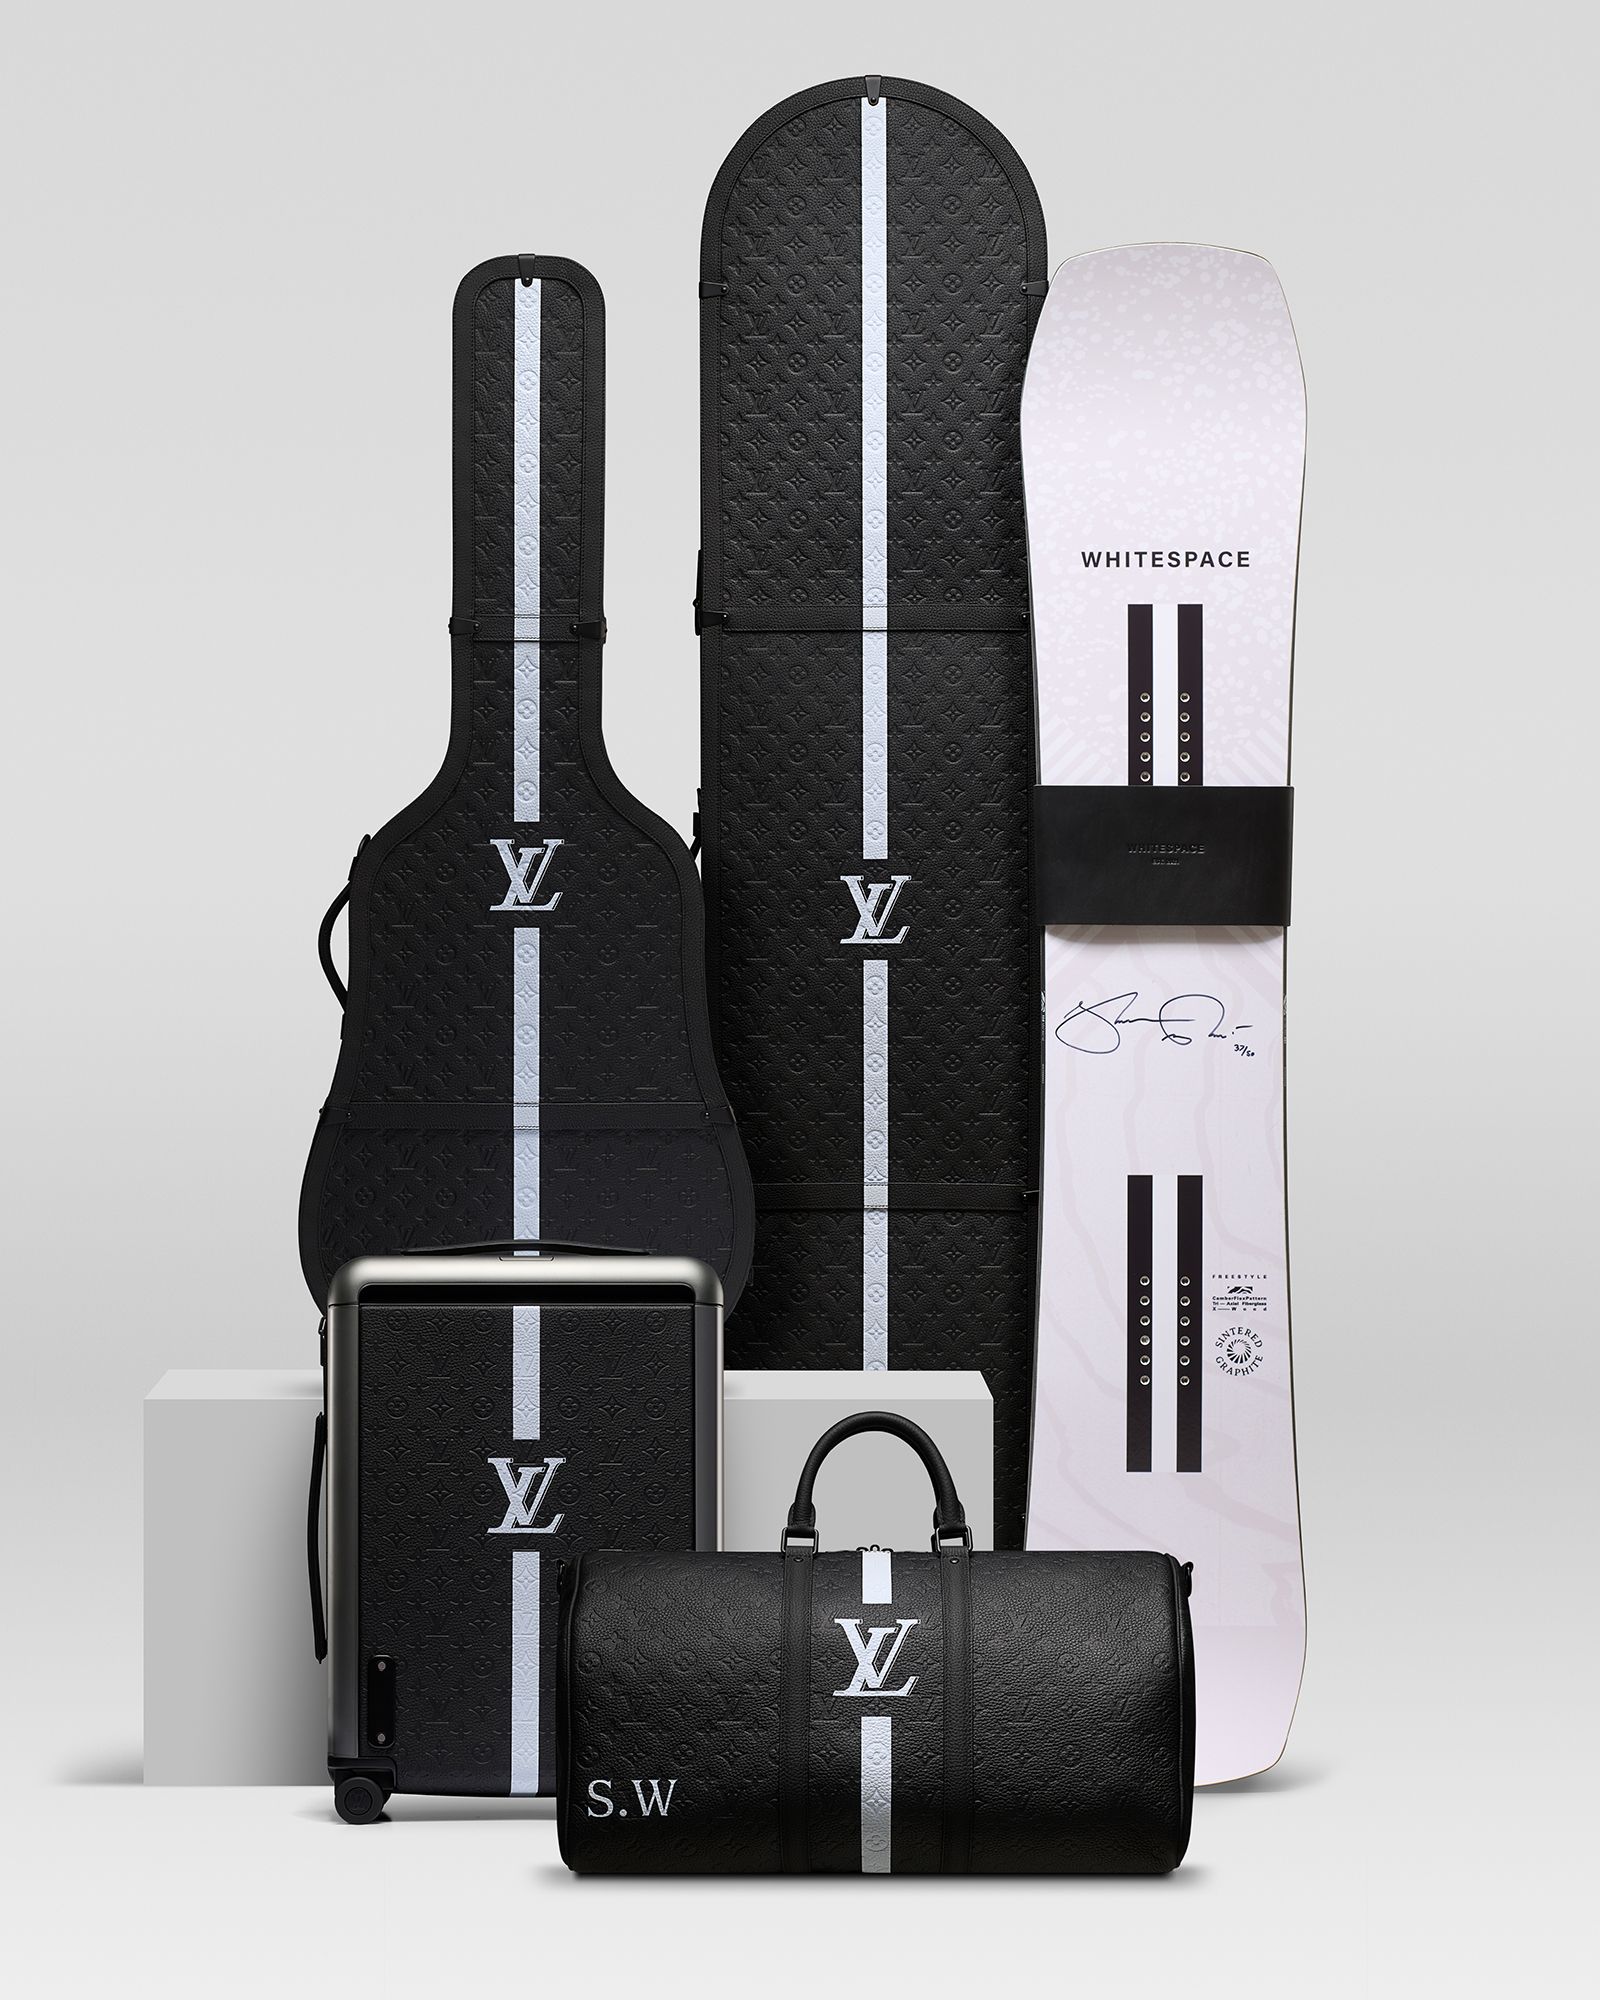 Shaun White Announces The New WHITESPACE x Louis Vuitton Collection